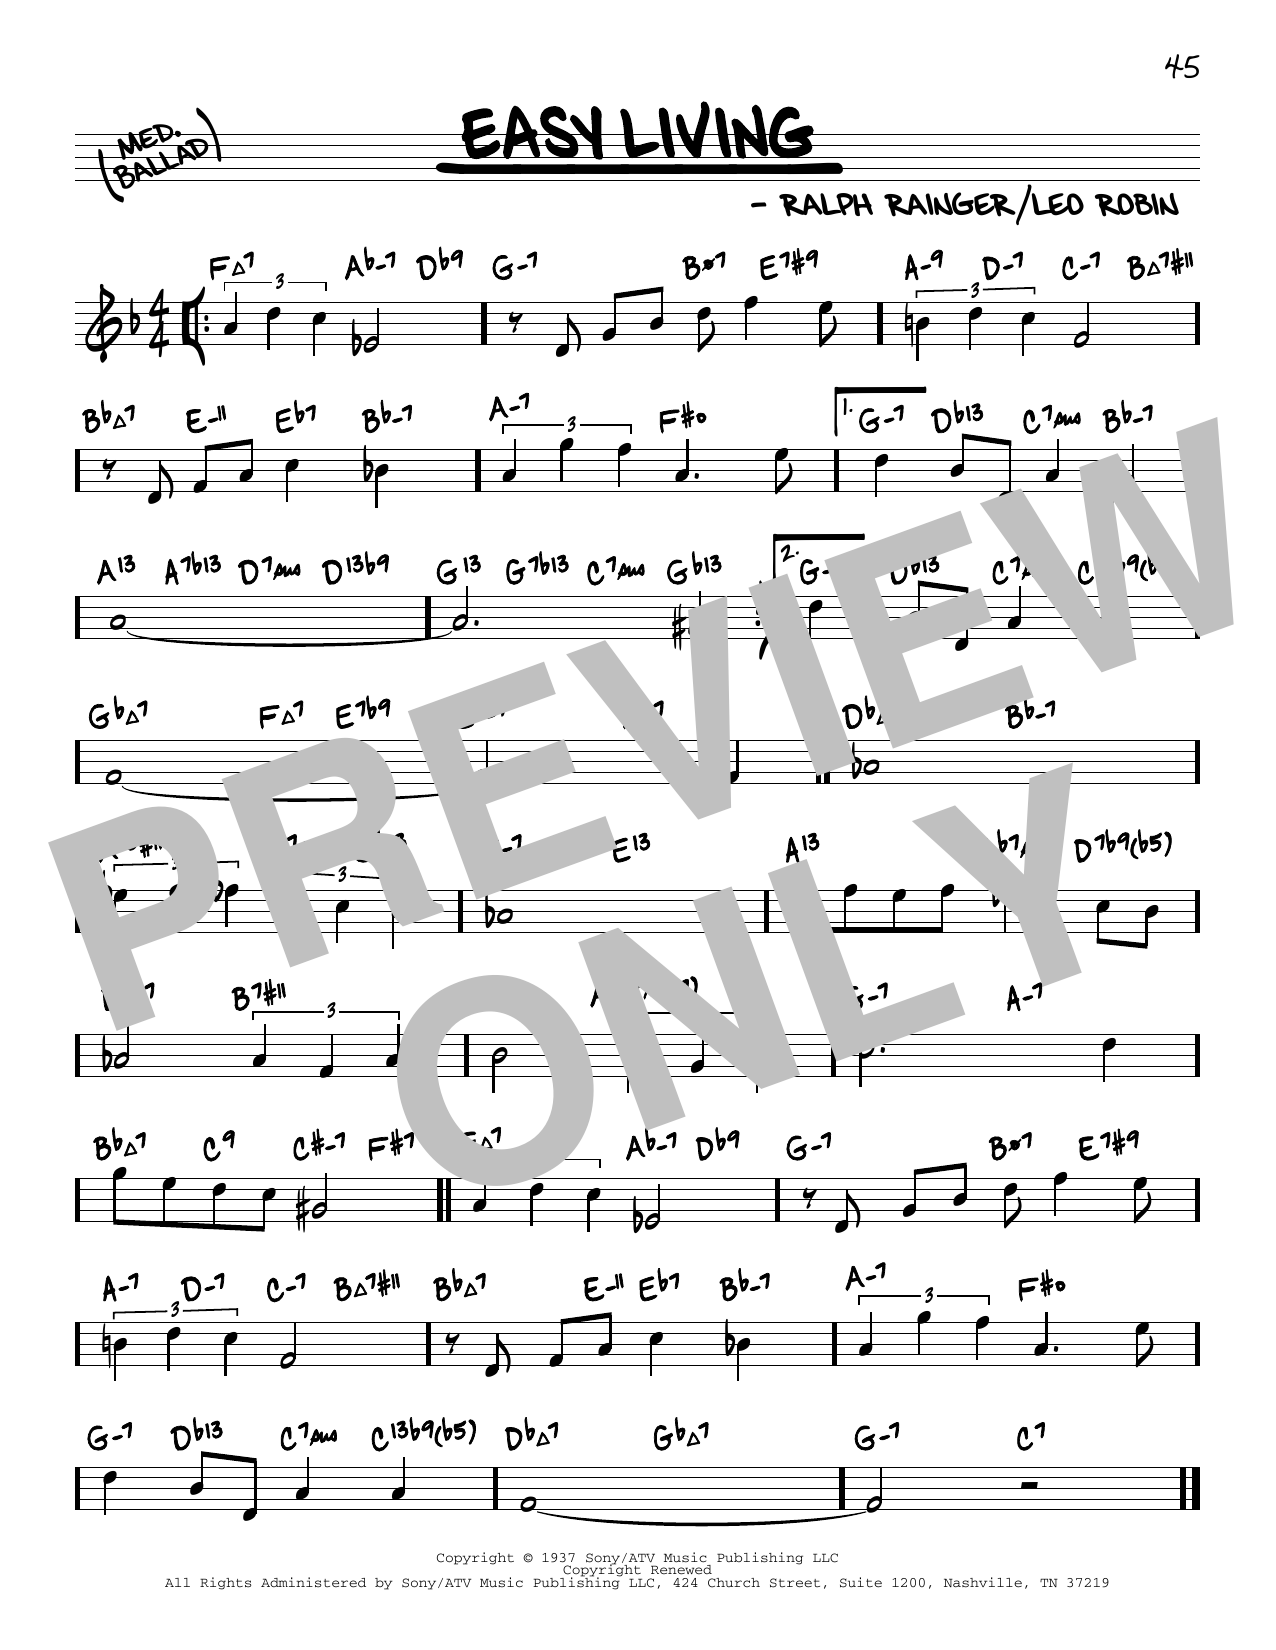 Ralph Rainger Easy Living (arr. David Hazeltine) Sheet Music Notes & Chords for Real Book – Enhanced Chords - Download or Print PDF